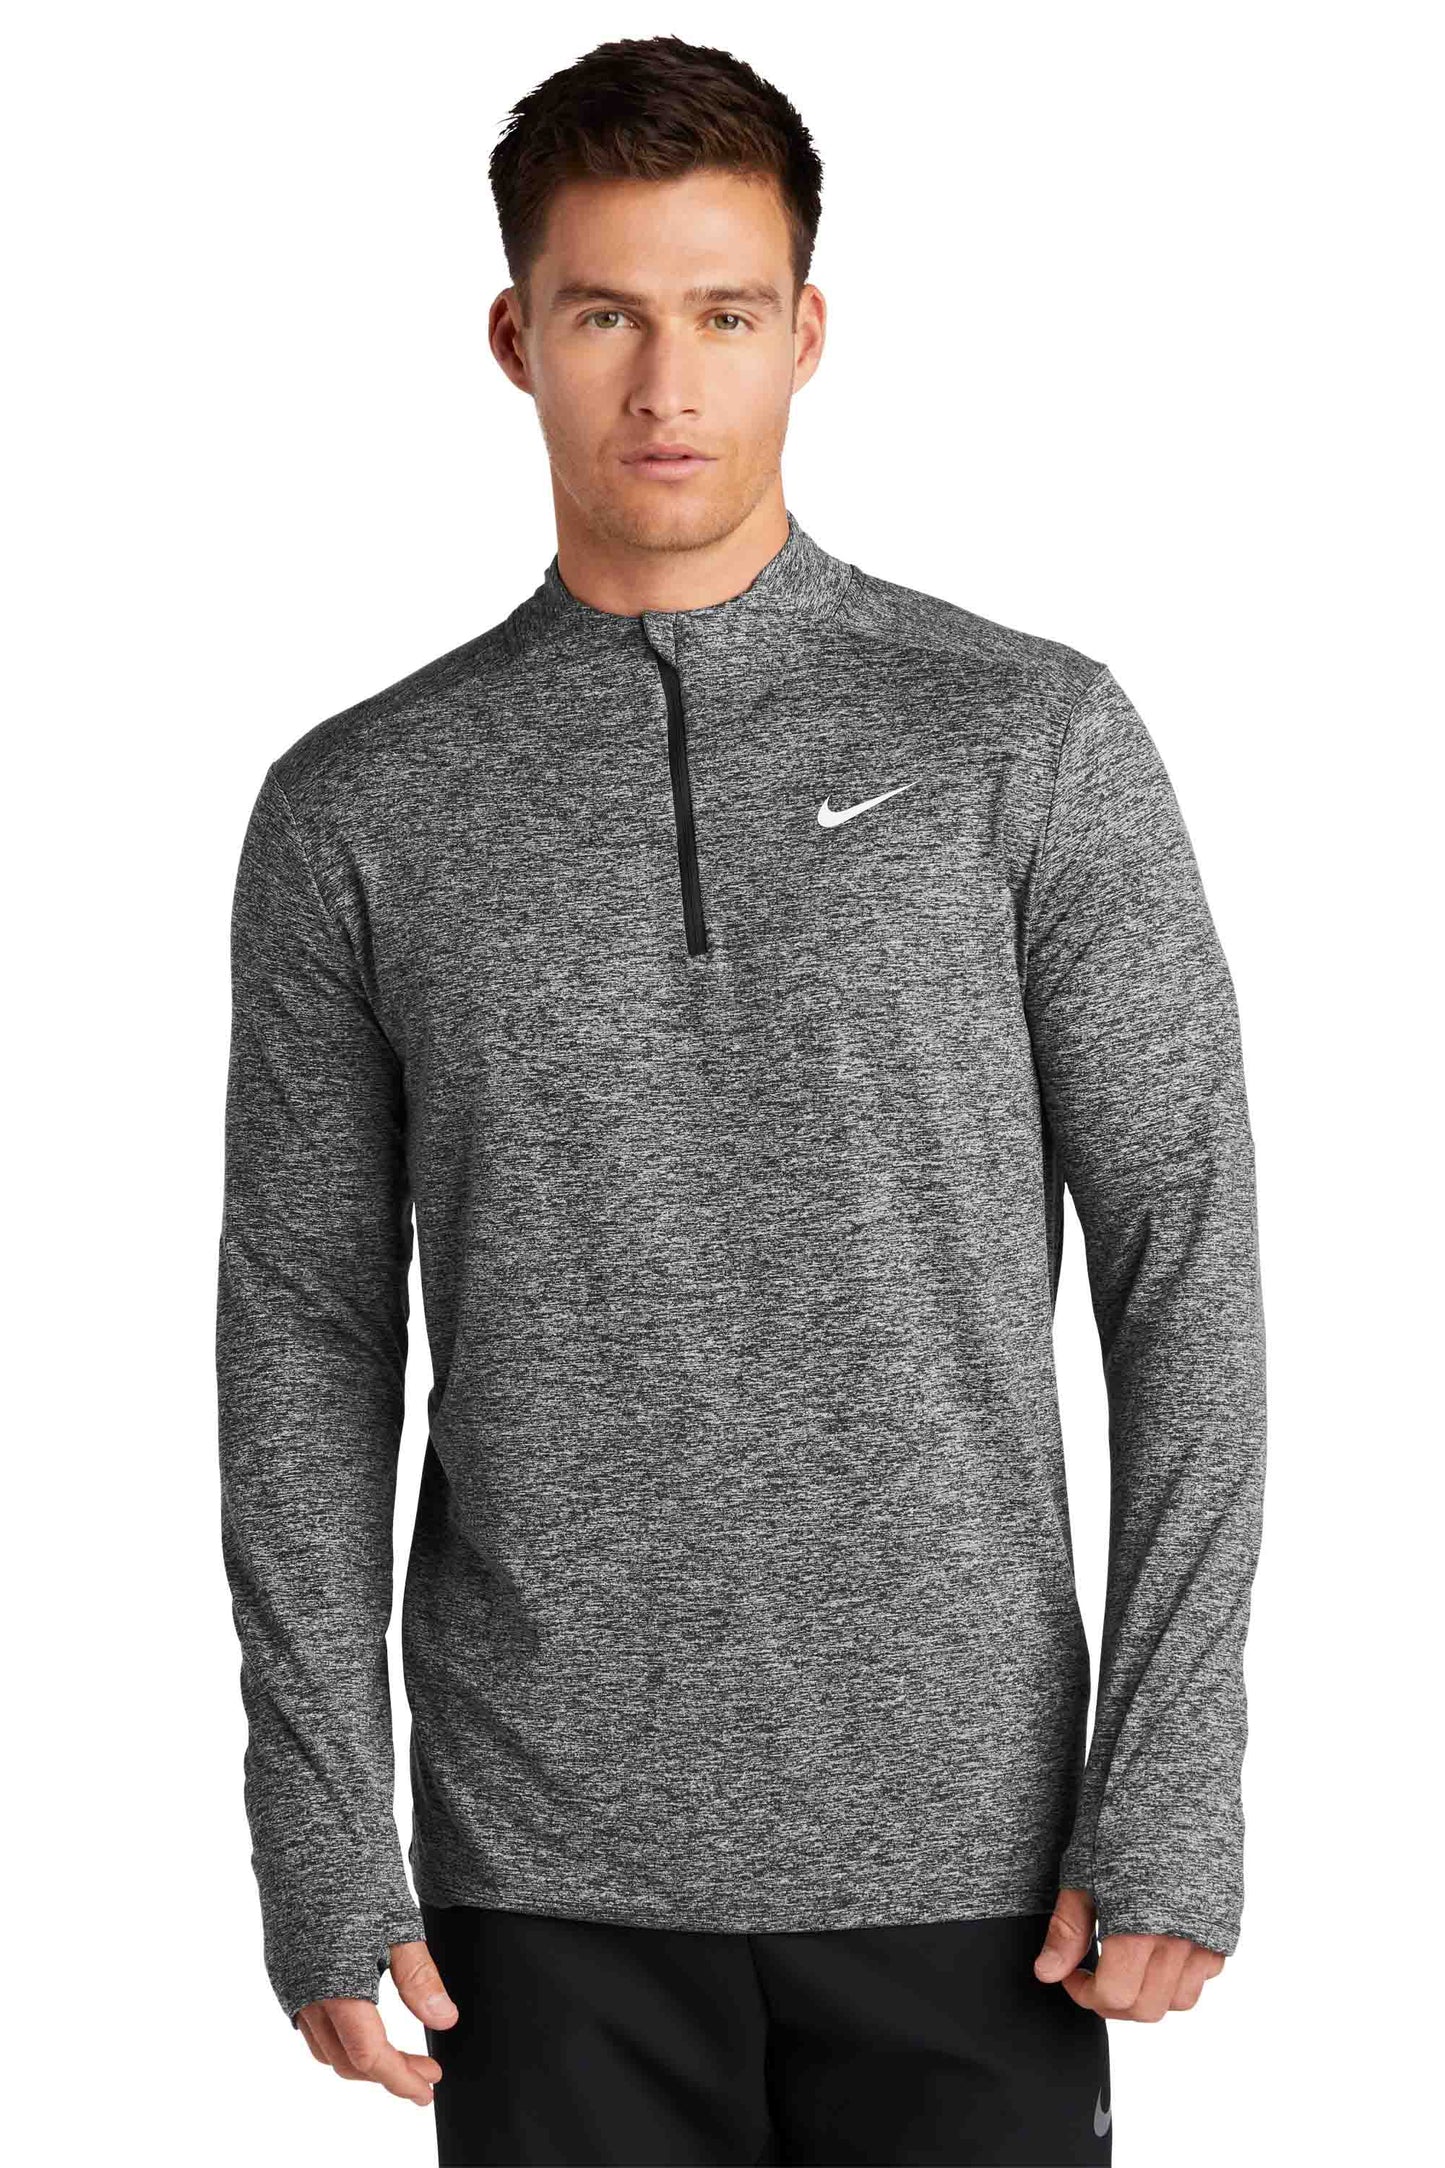 Nike Dri-FIT Lightweight 1/2 Zip Pullover